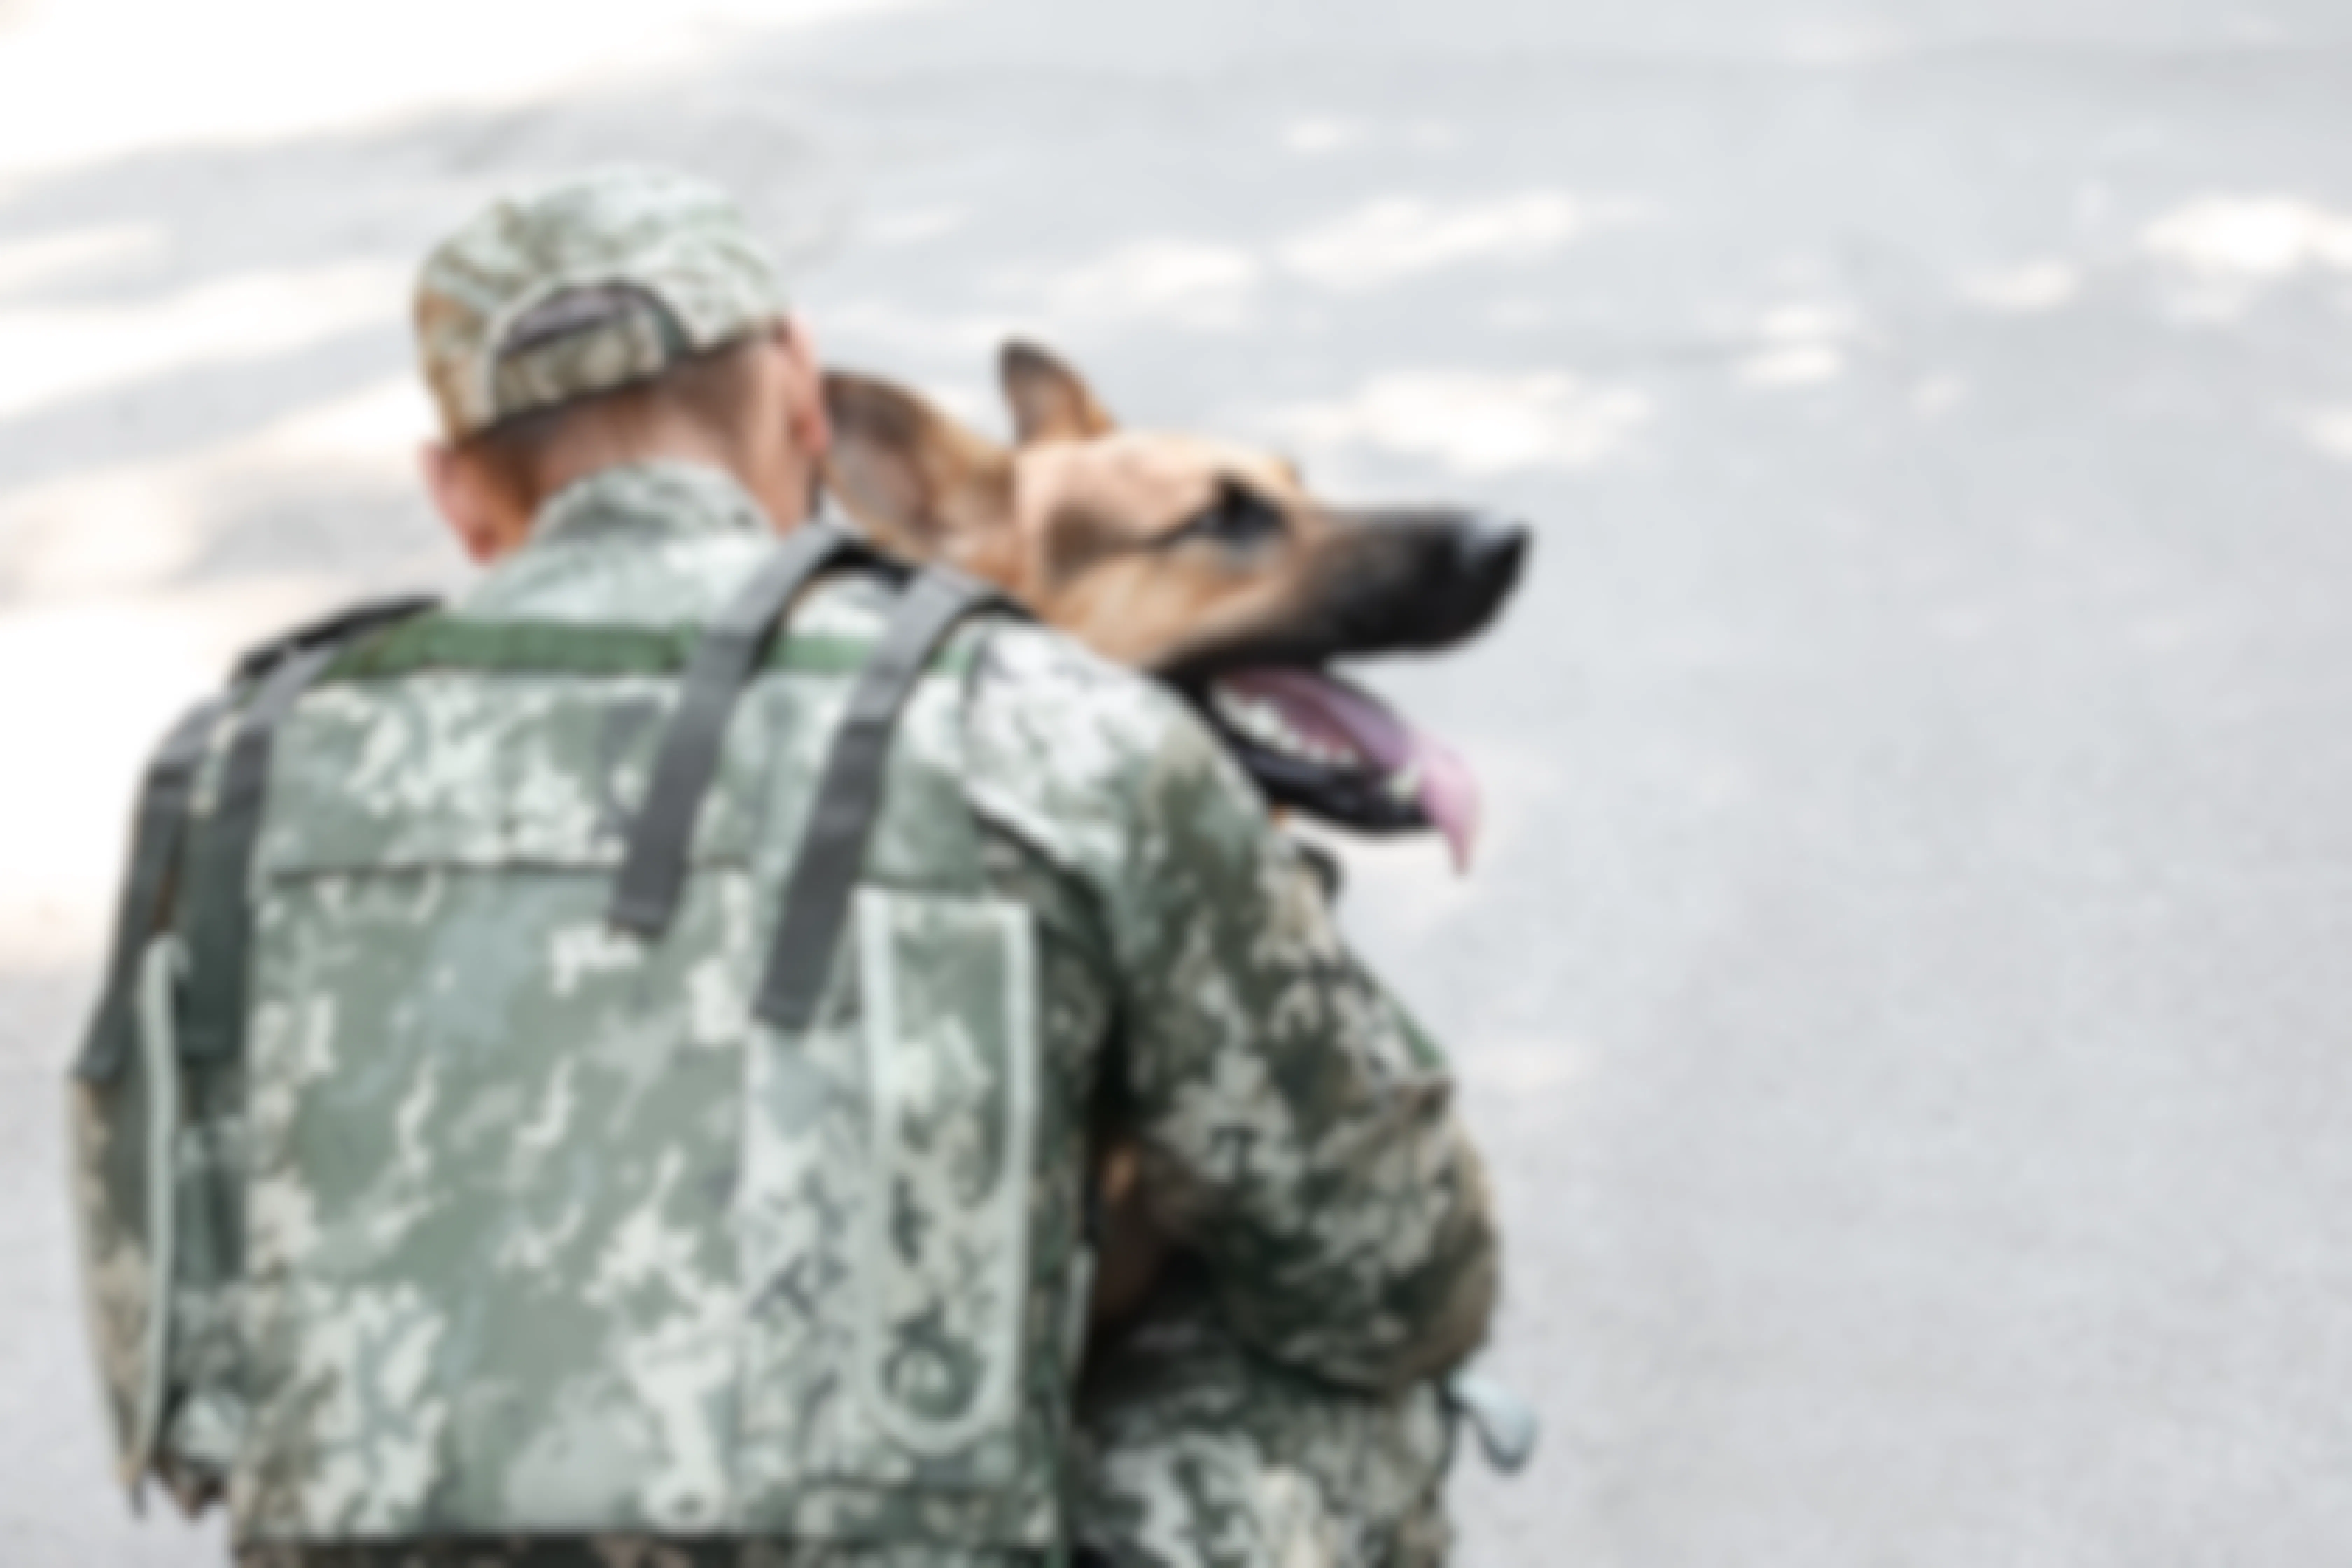 Member of the US Armed Forces dressed in a uniform kneeling down, hugging a German Shepherd dog.